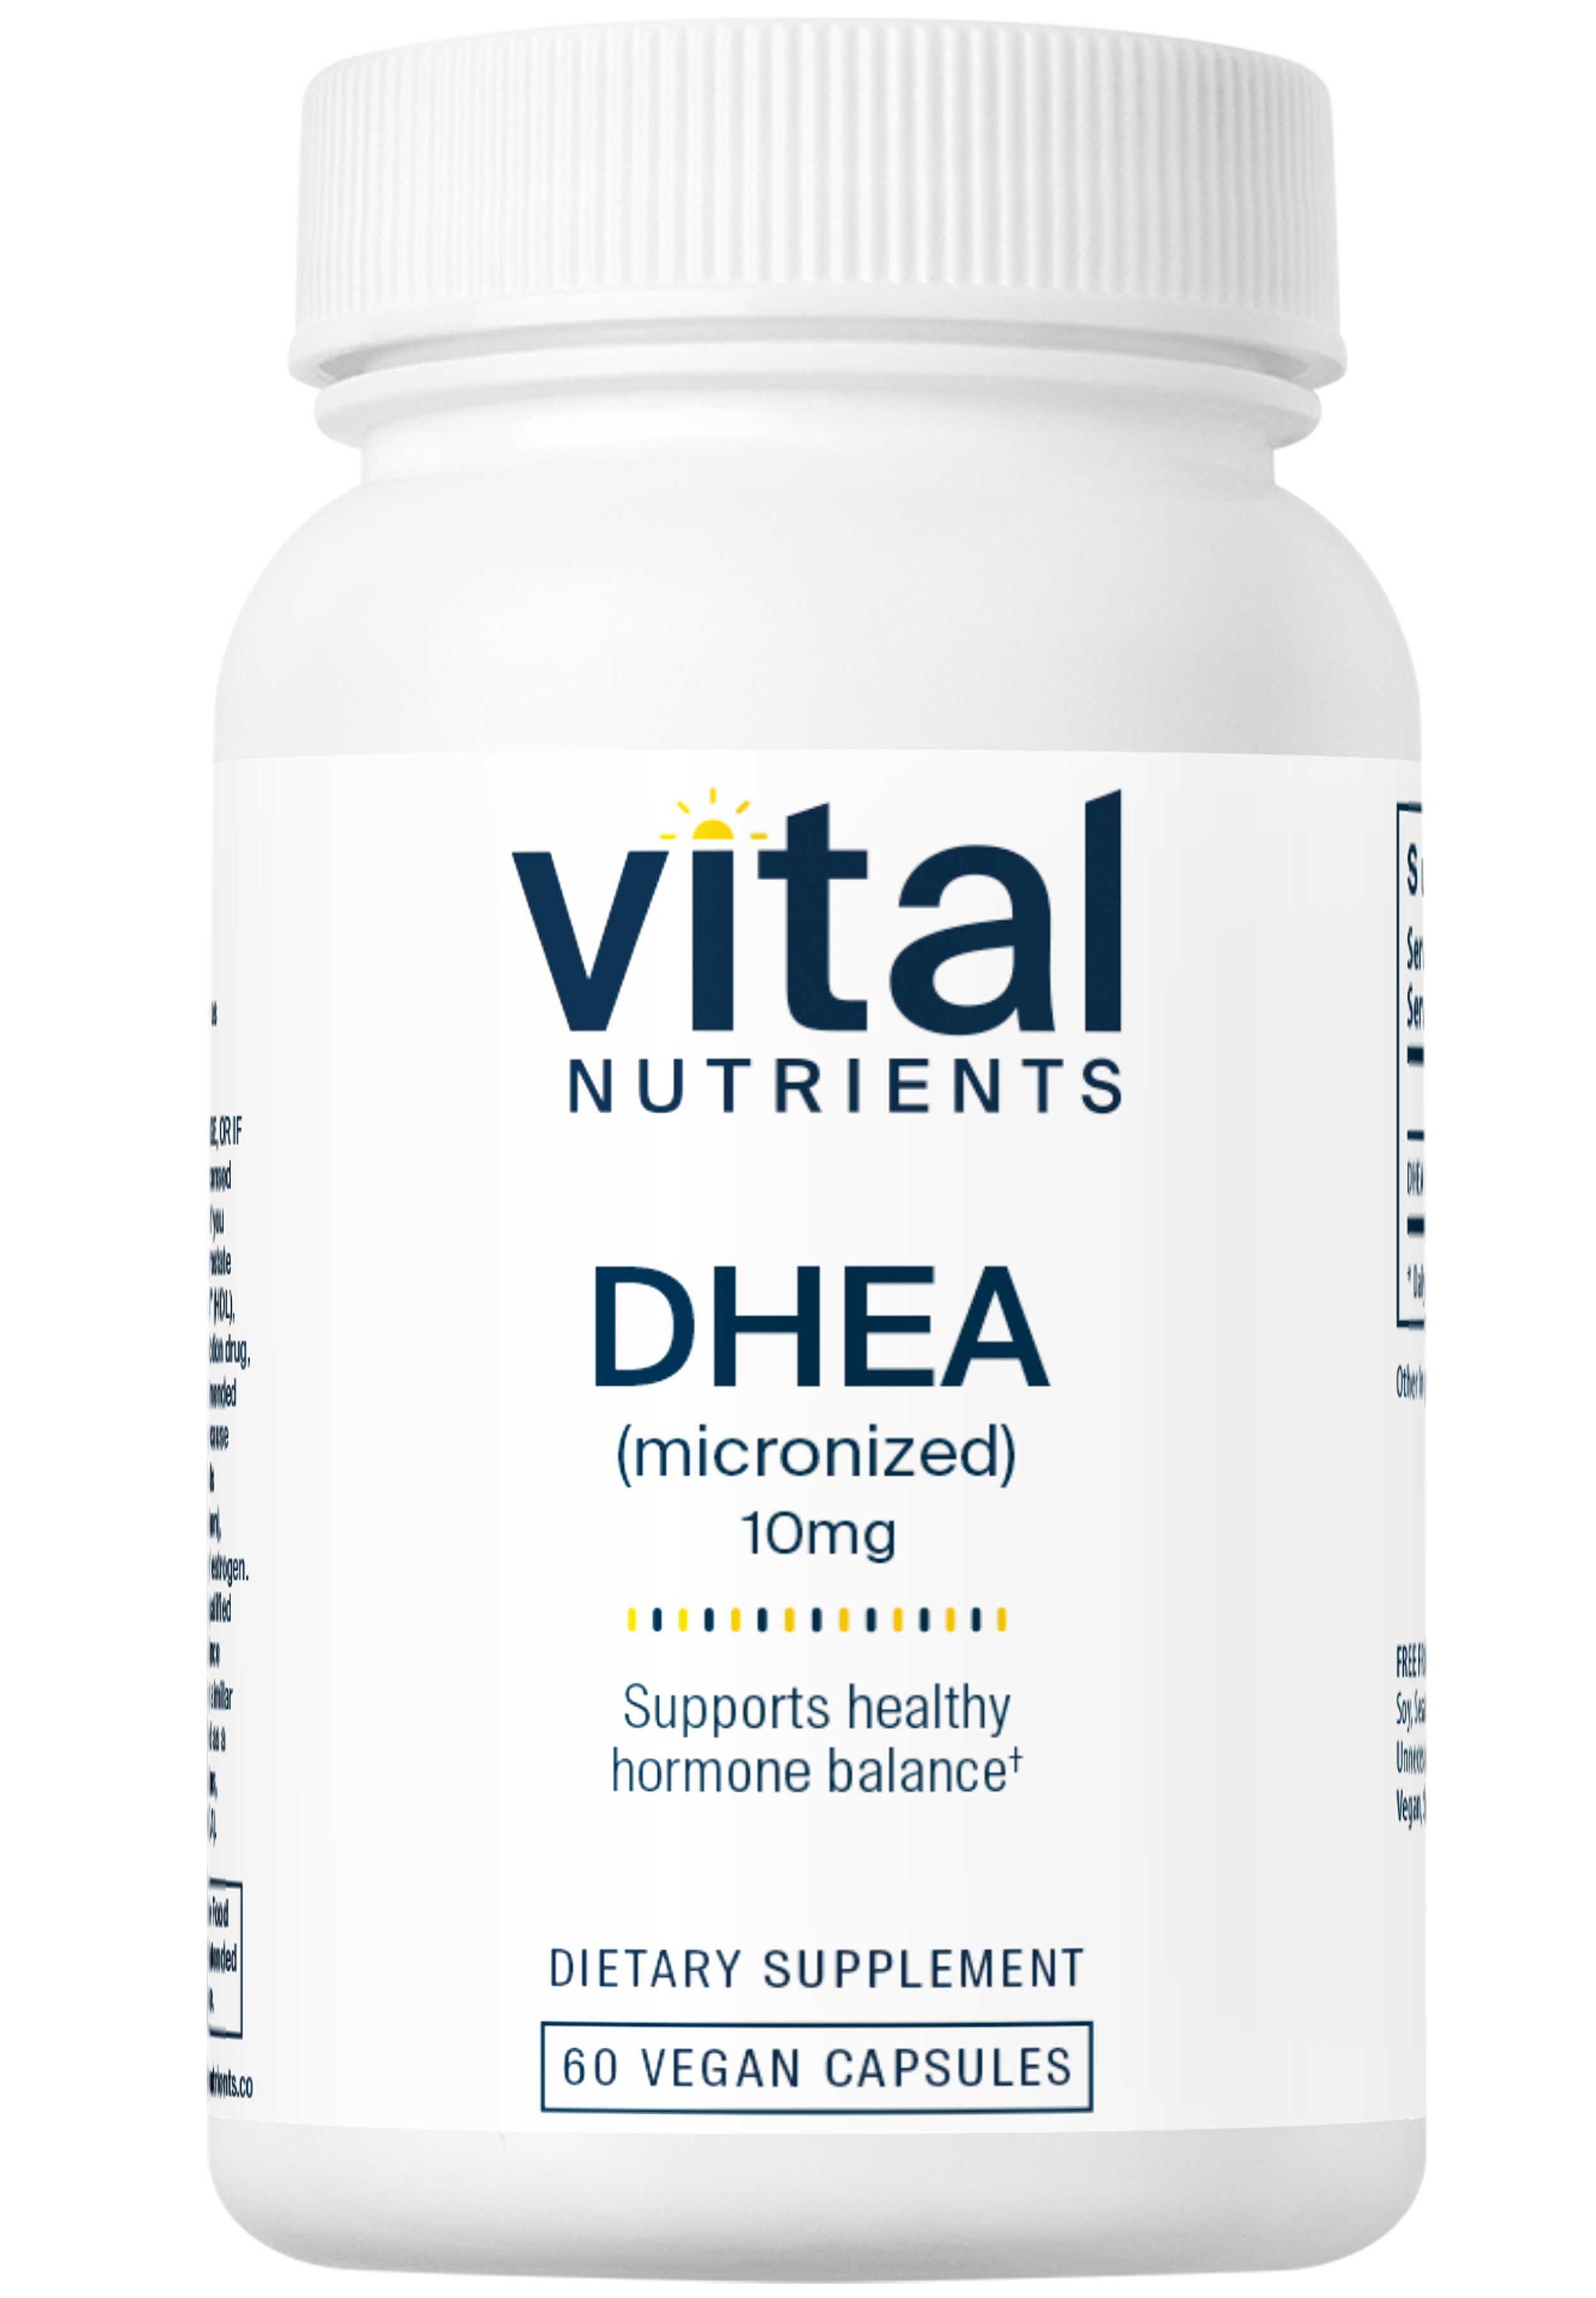 Vital Nutrients DHEA (micronized) 10mg